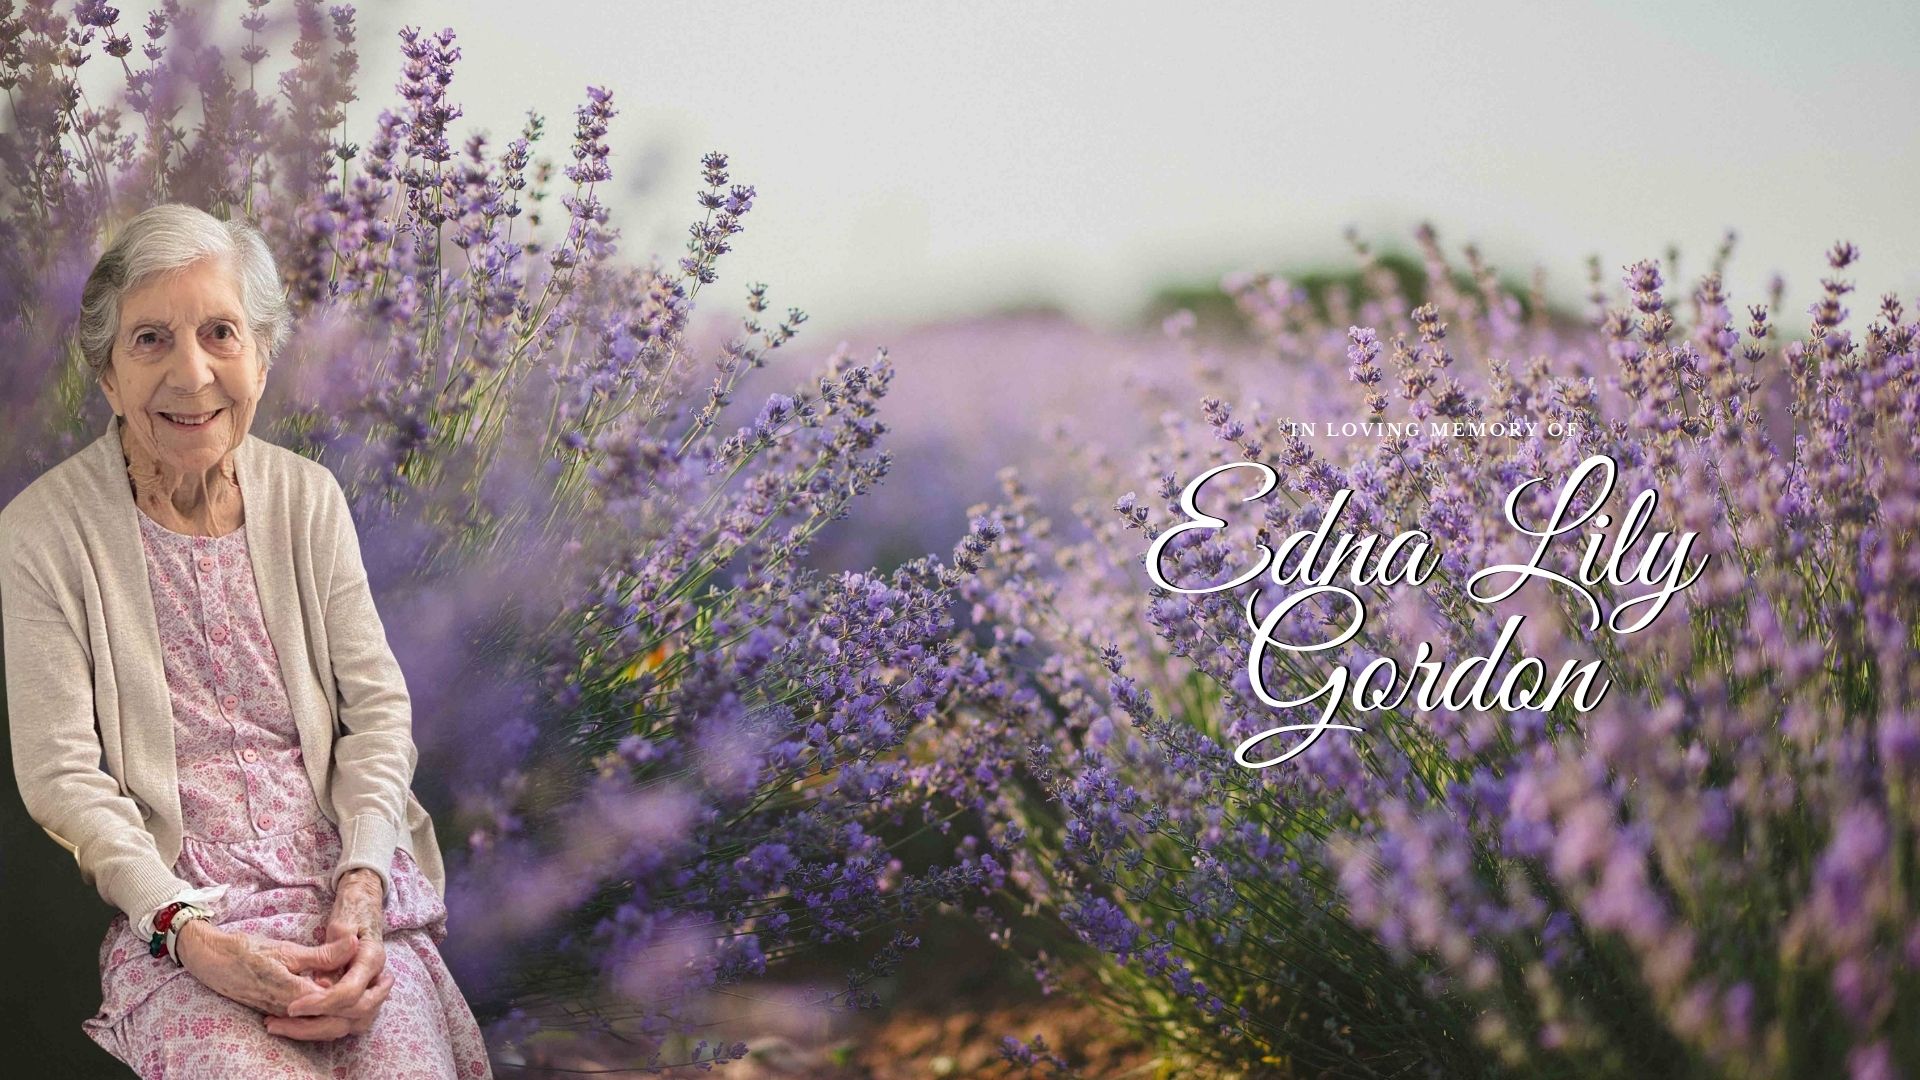 Edna Lily Gordon